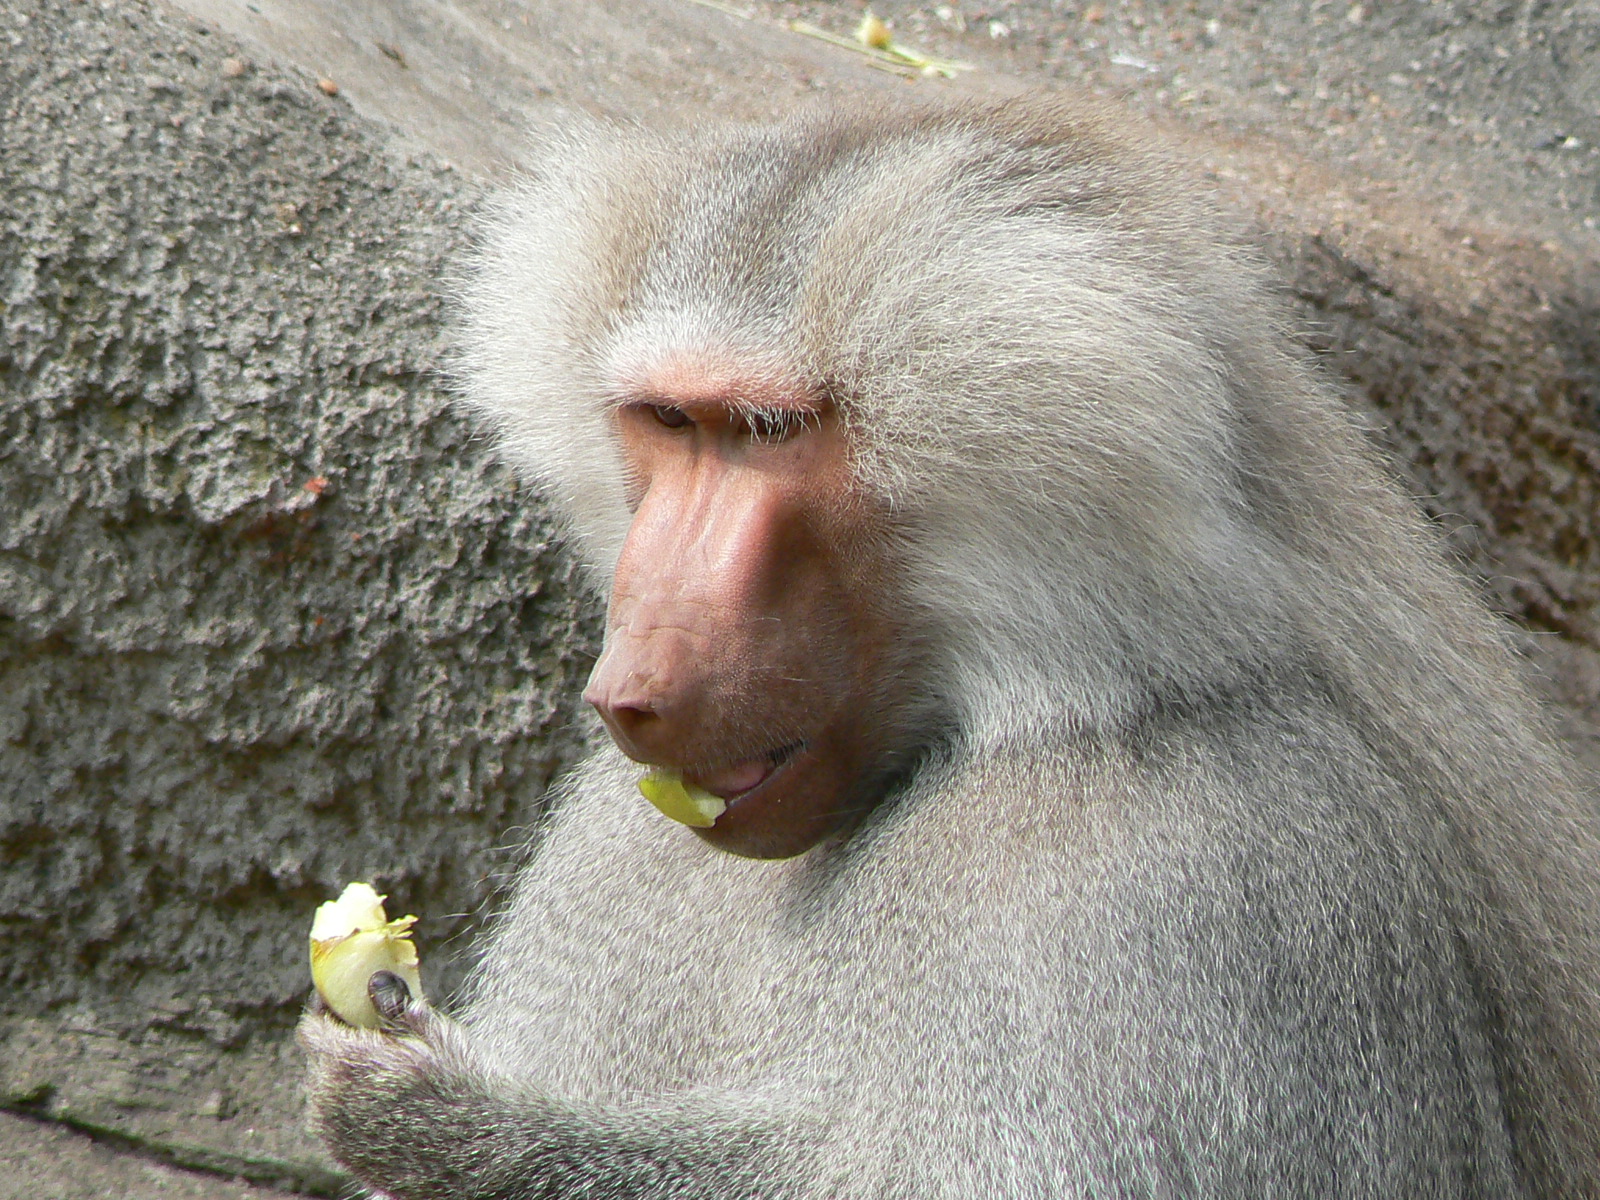 Hamadryas Baboon eating an apple